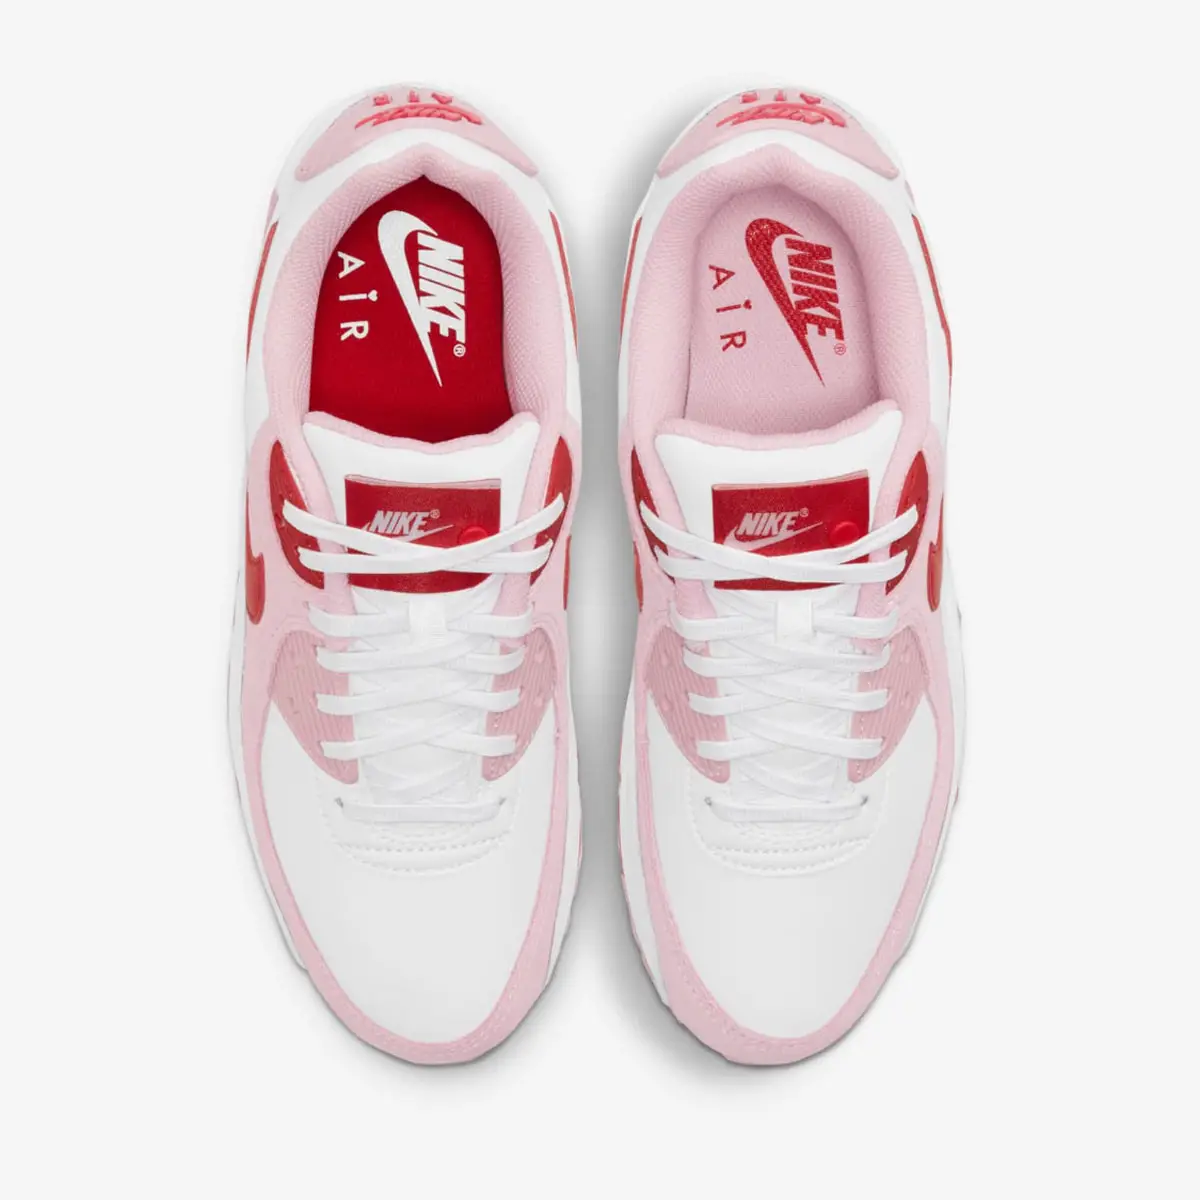 valentine shoes jordans 2020